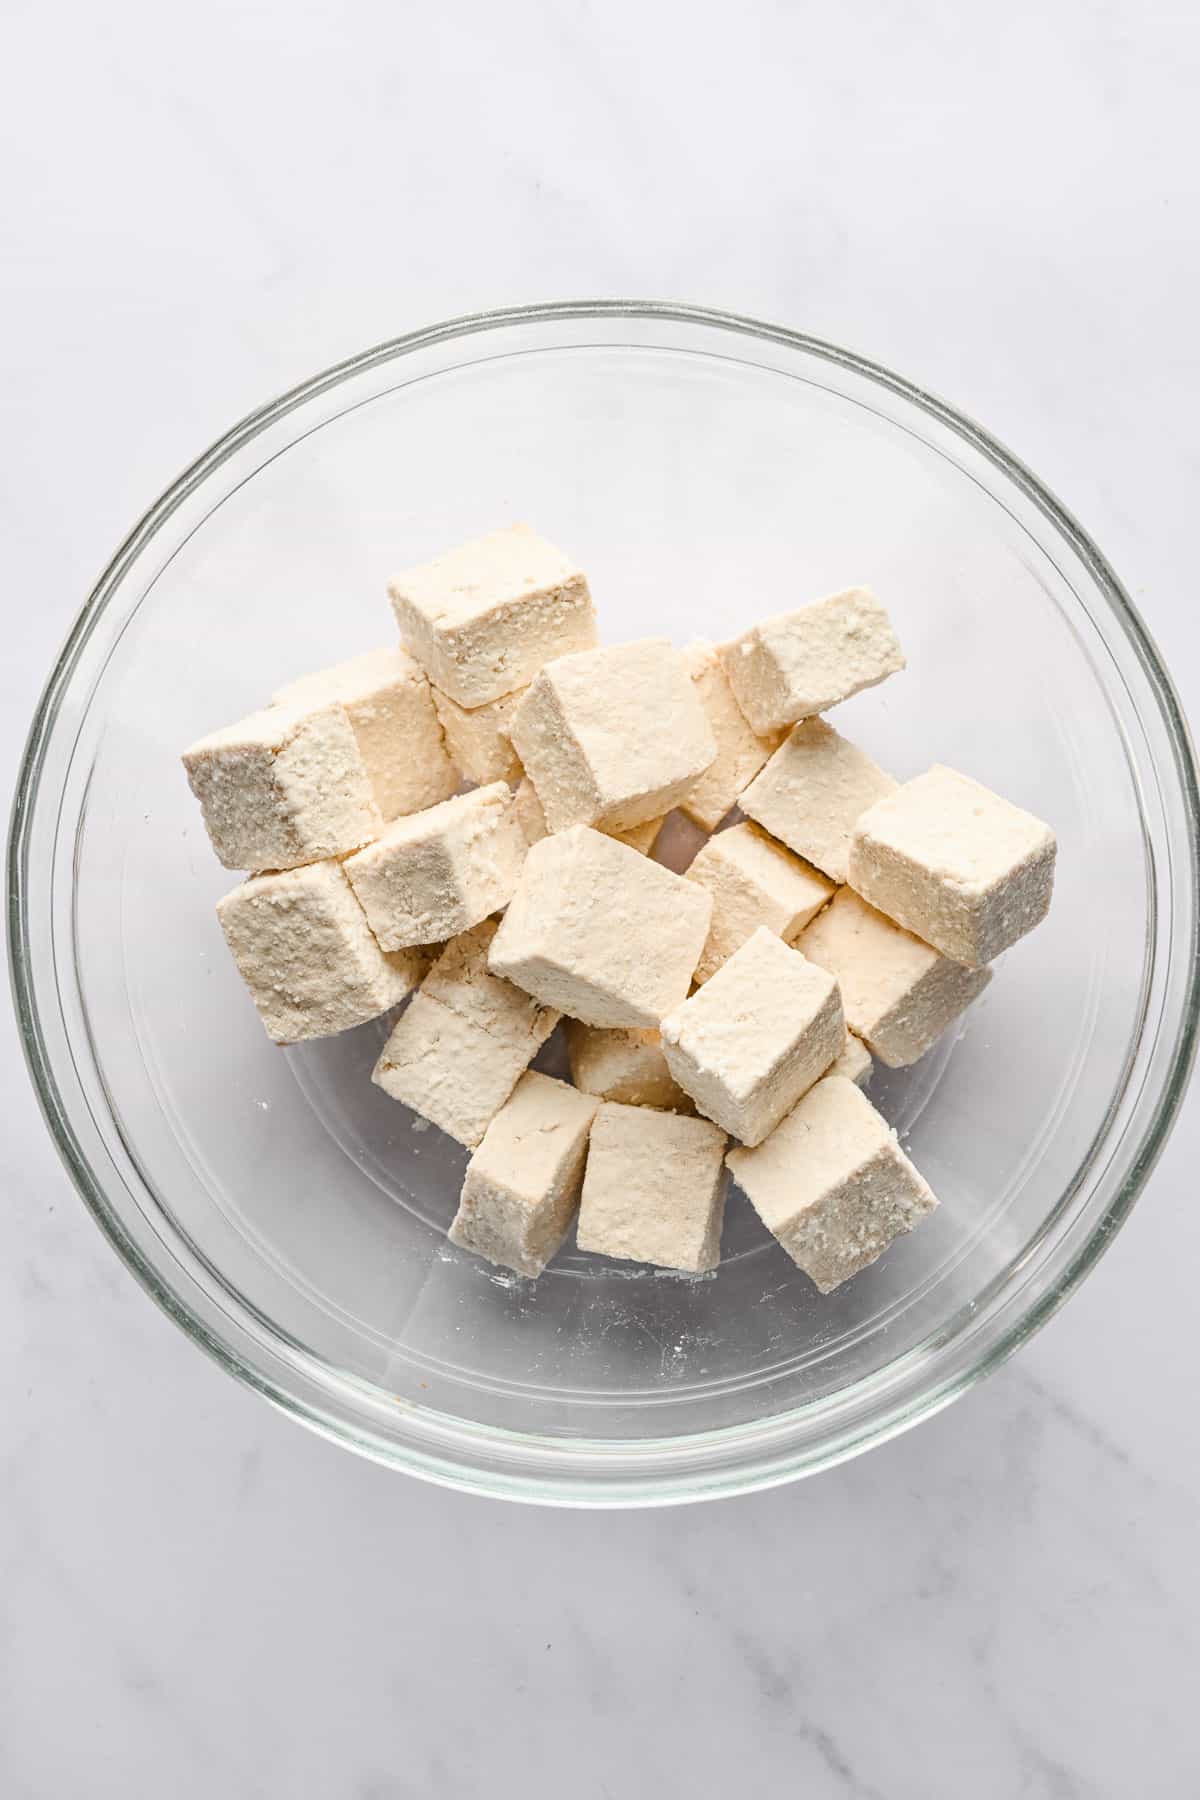 Cubed tofu in a glass bowl.